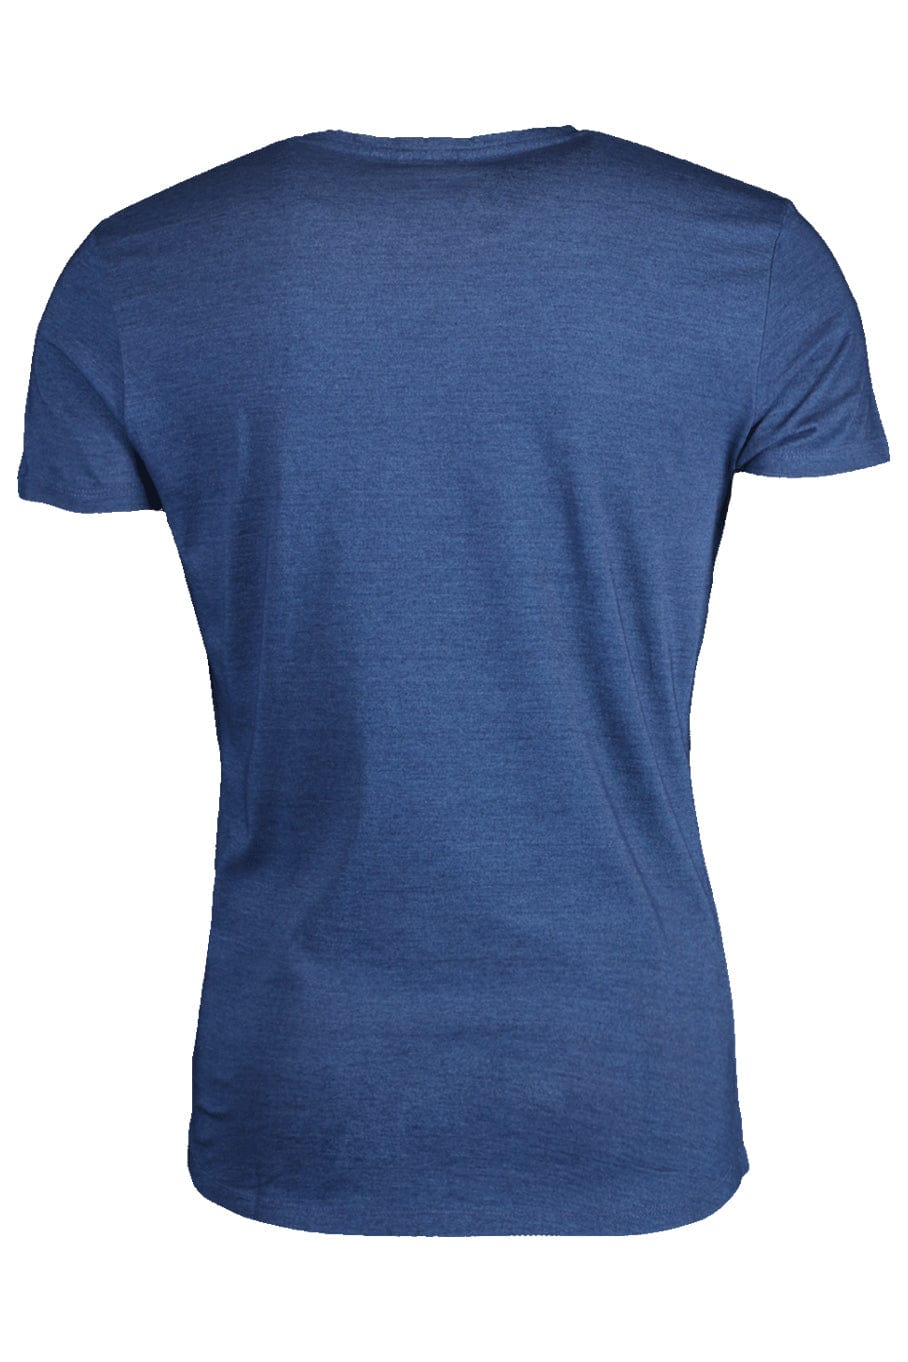 ORLEBAR BROWN-OB-T Cotton T-Shirt-